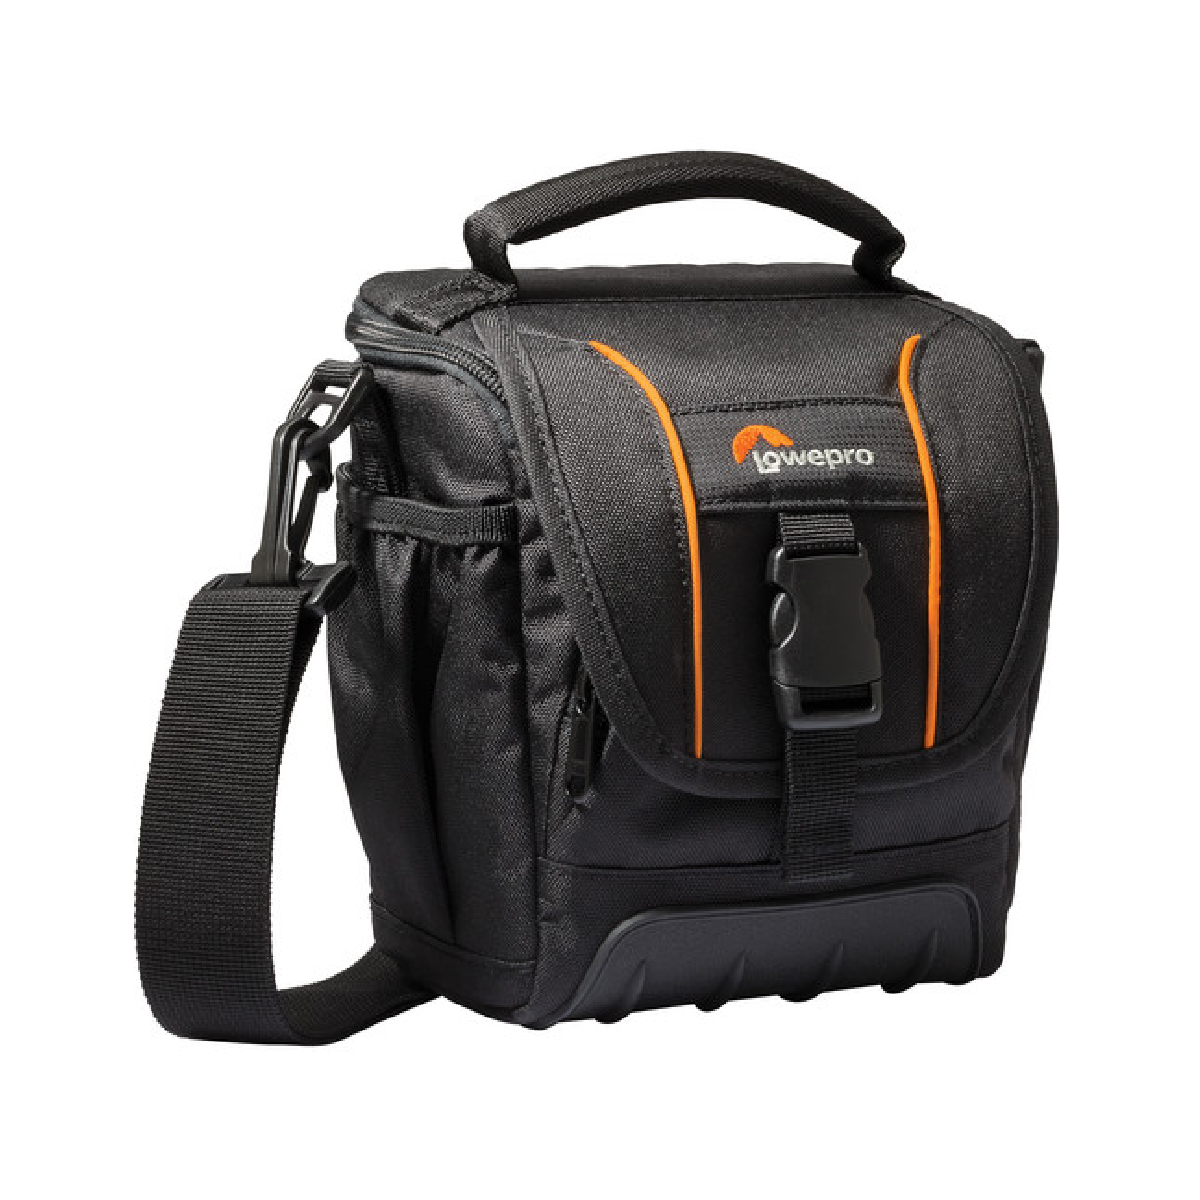 Lowepro Adventura Sh 120 II Shoulder Bag Black